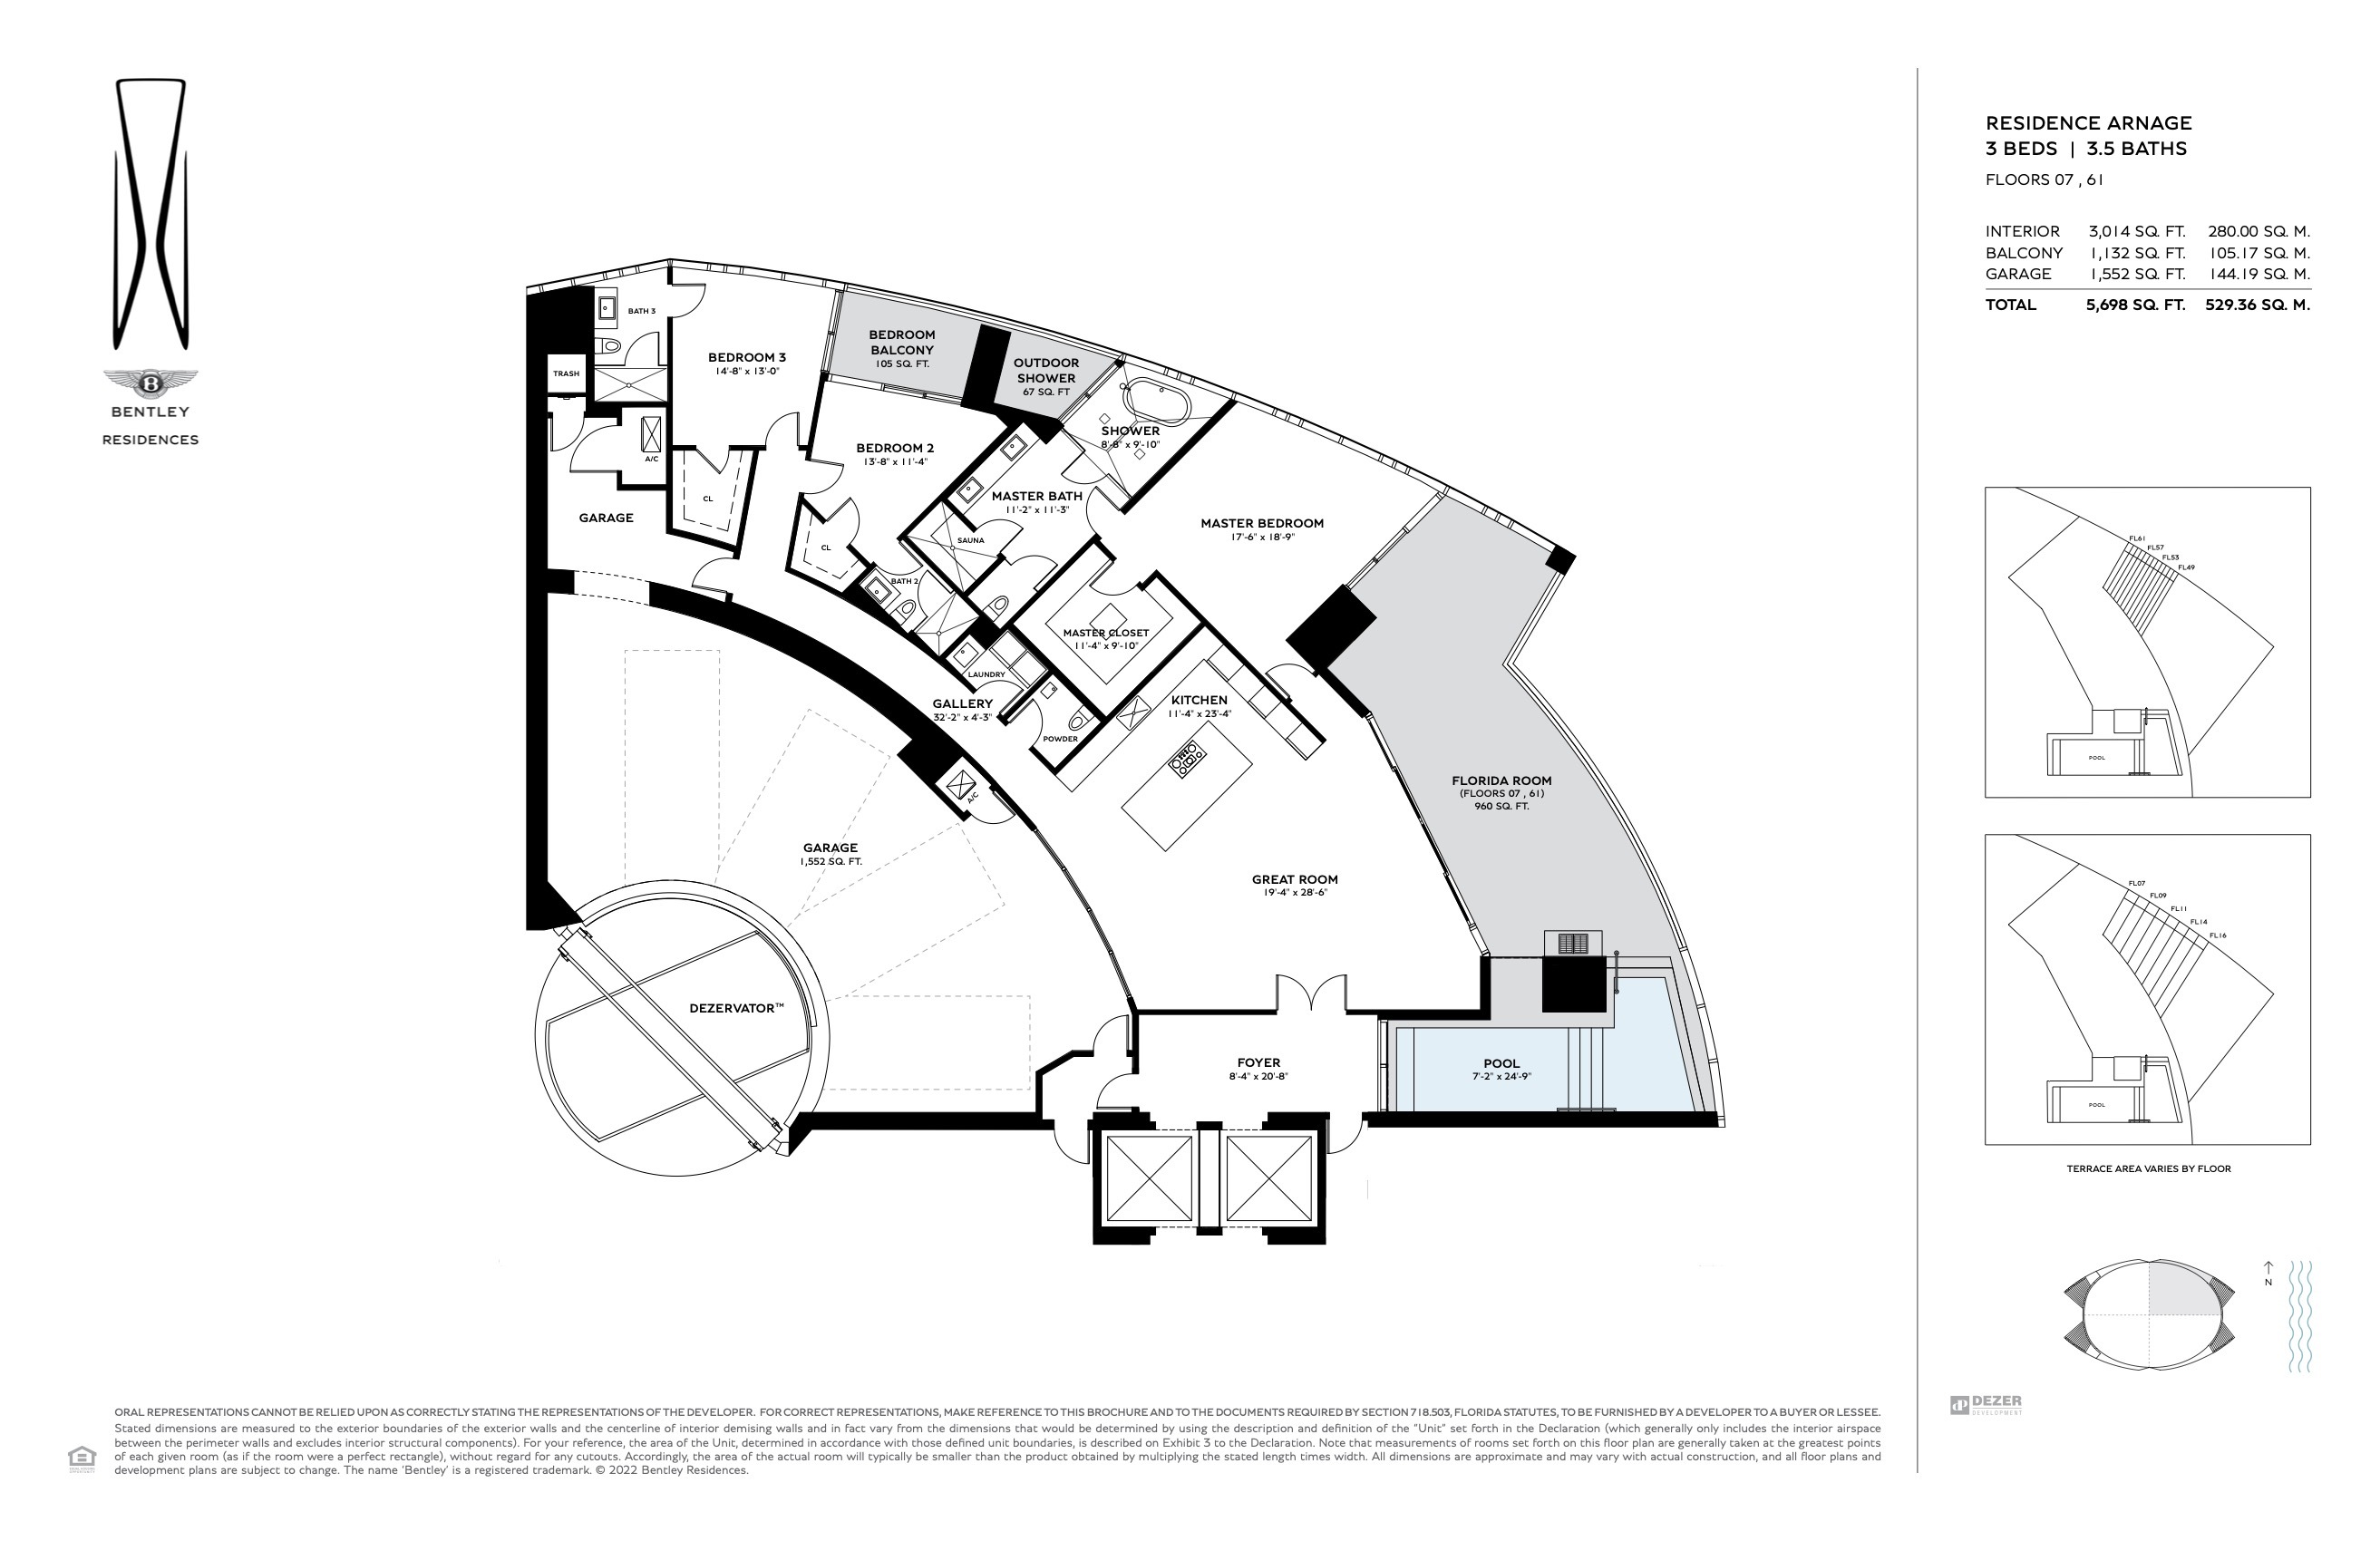 Floor Plan for The Bentley Residences Sunny Isles Floorplans, Residence Arnage